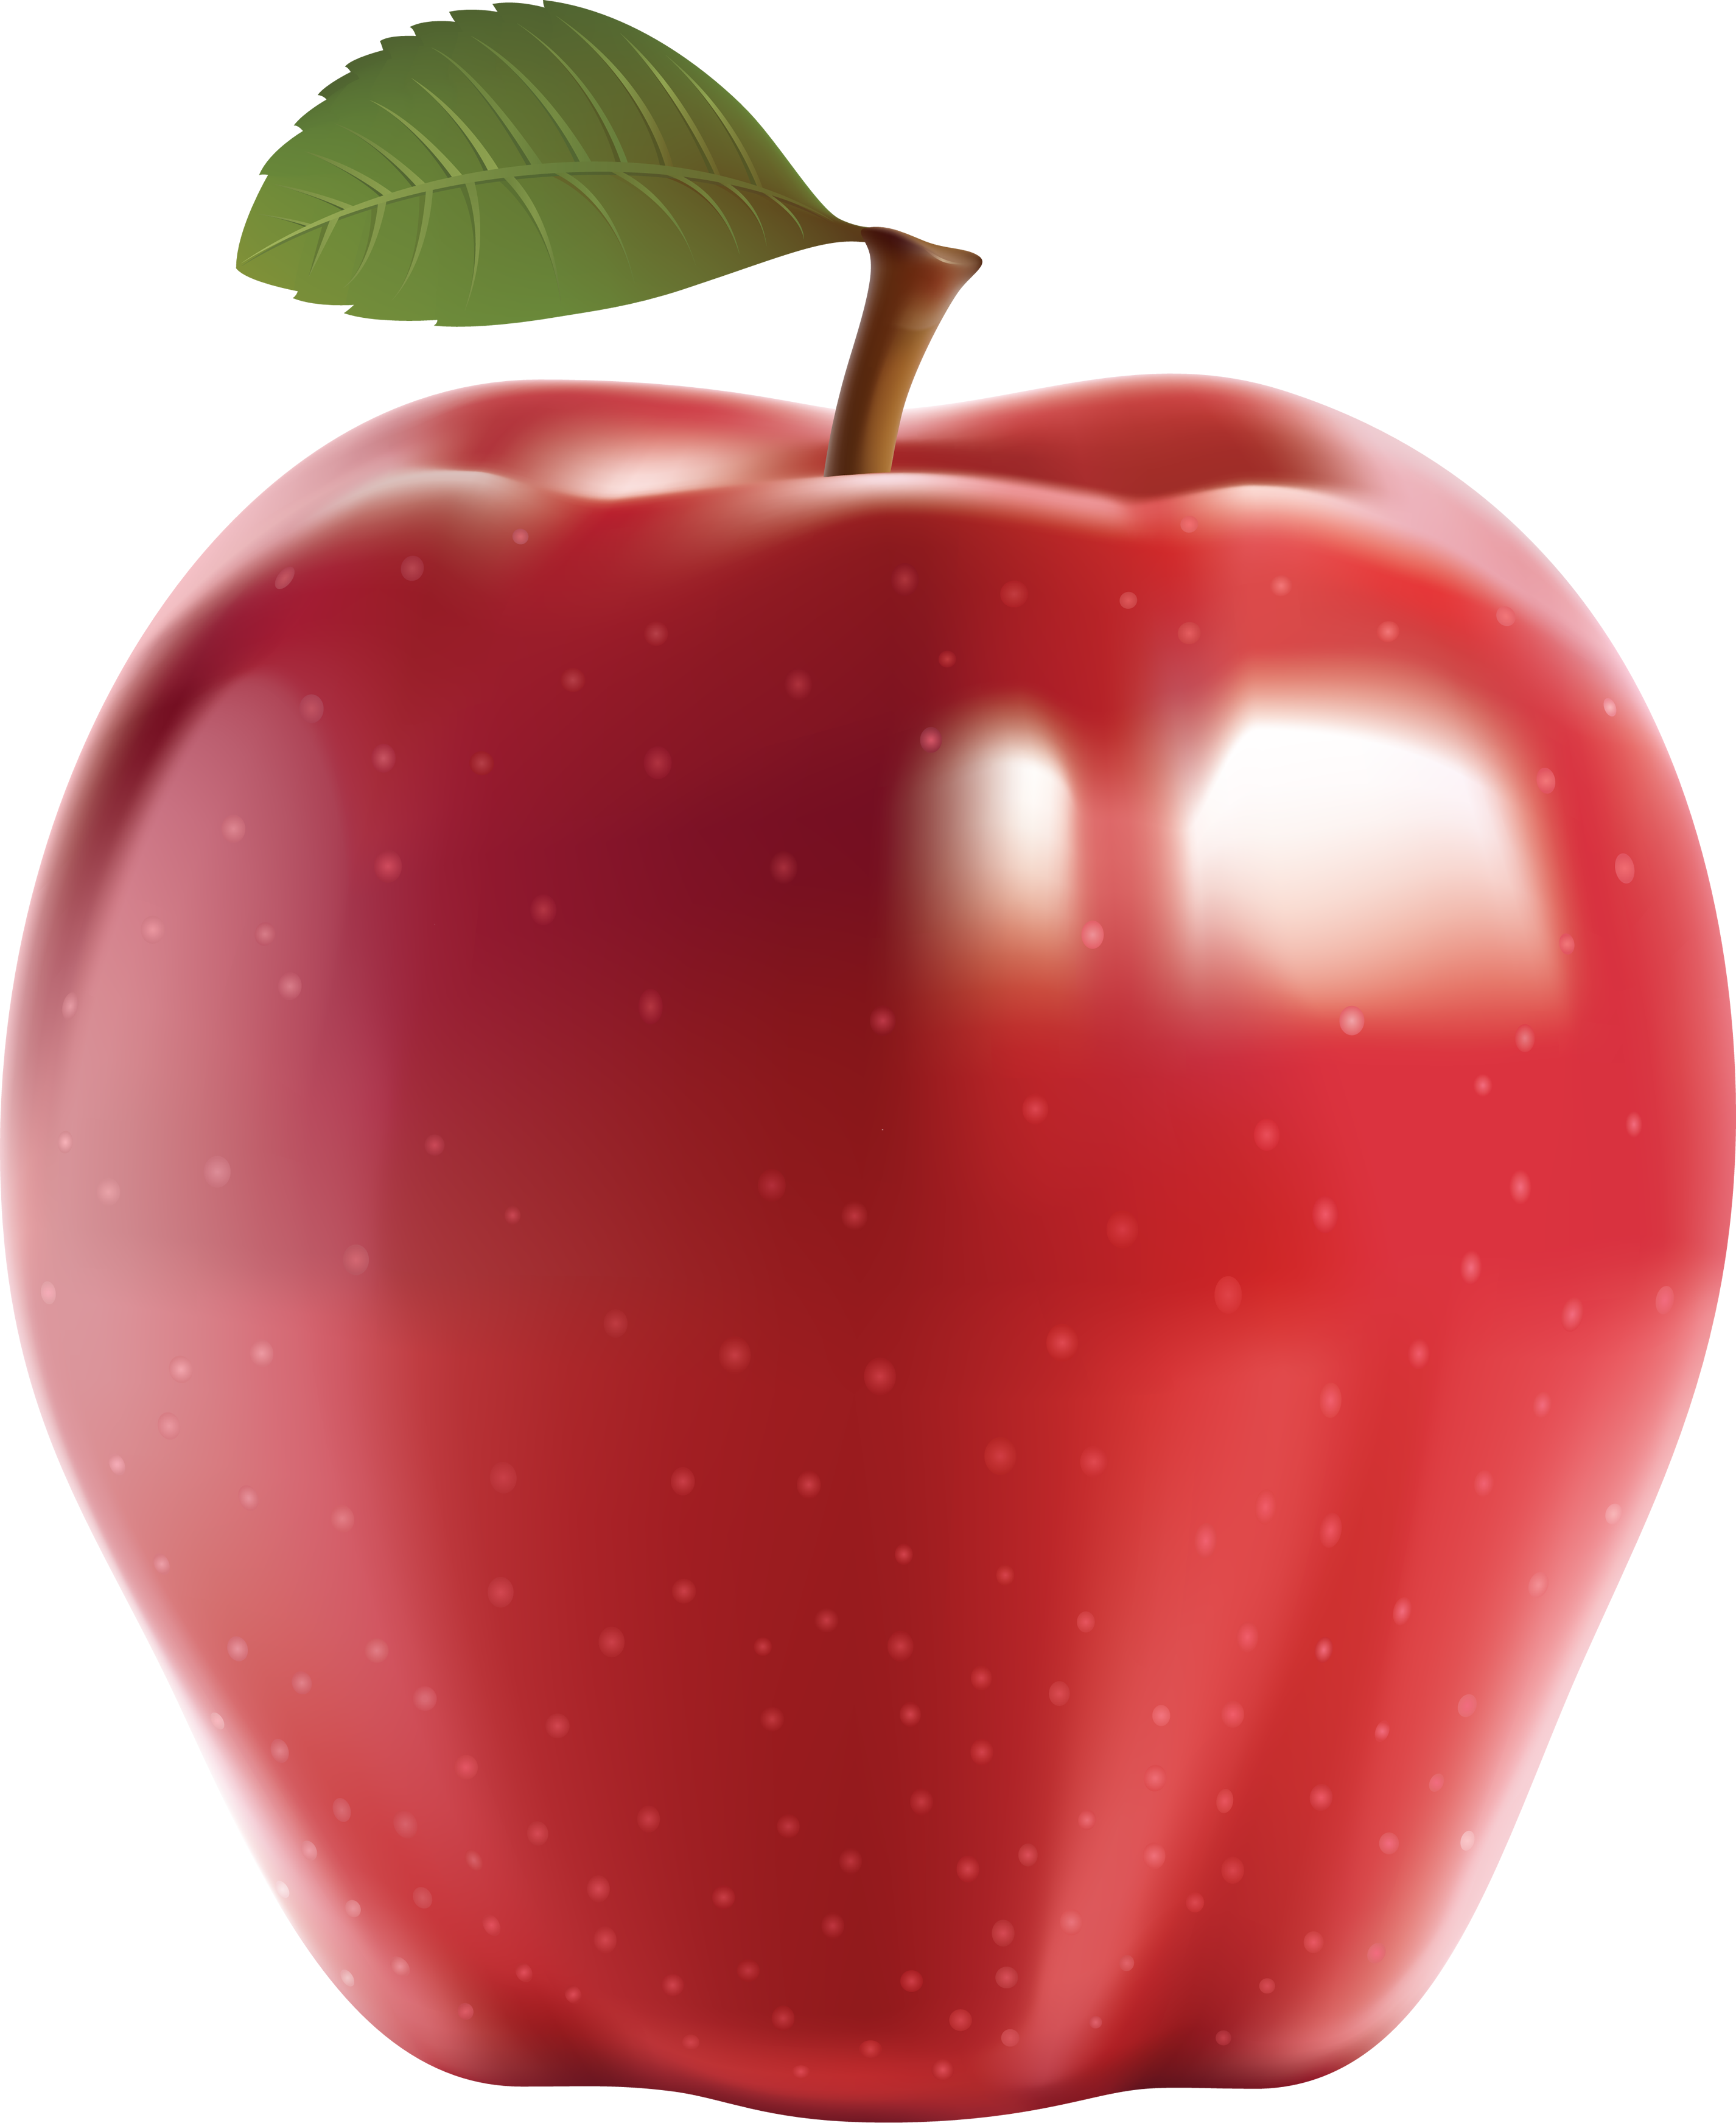 Apple Fruit PNG - 28147